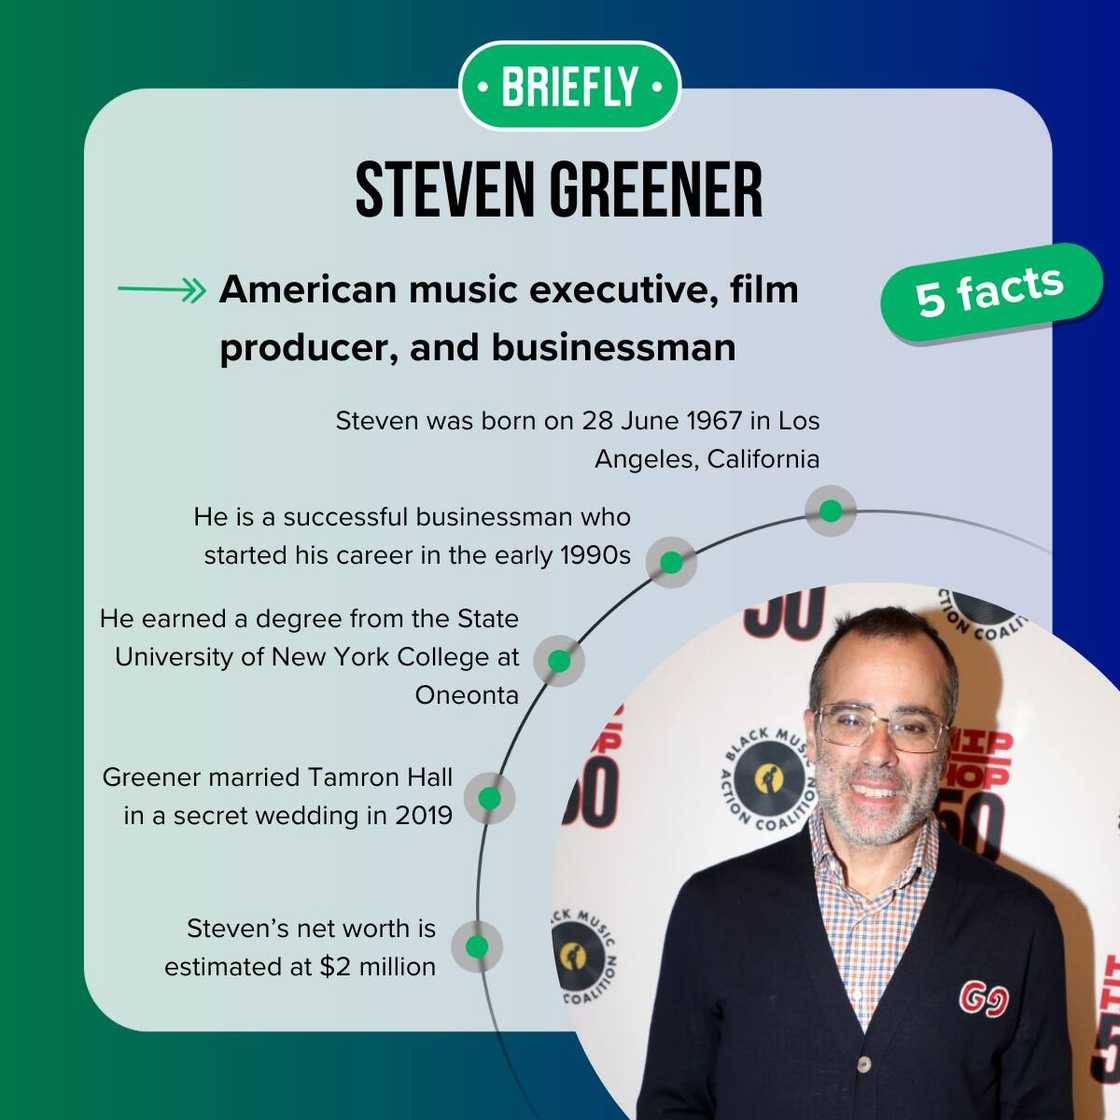 Steven Greener's facts